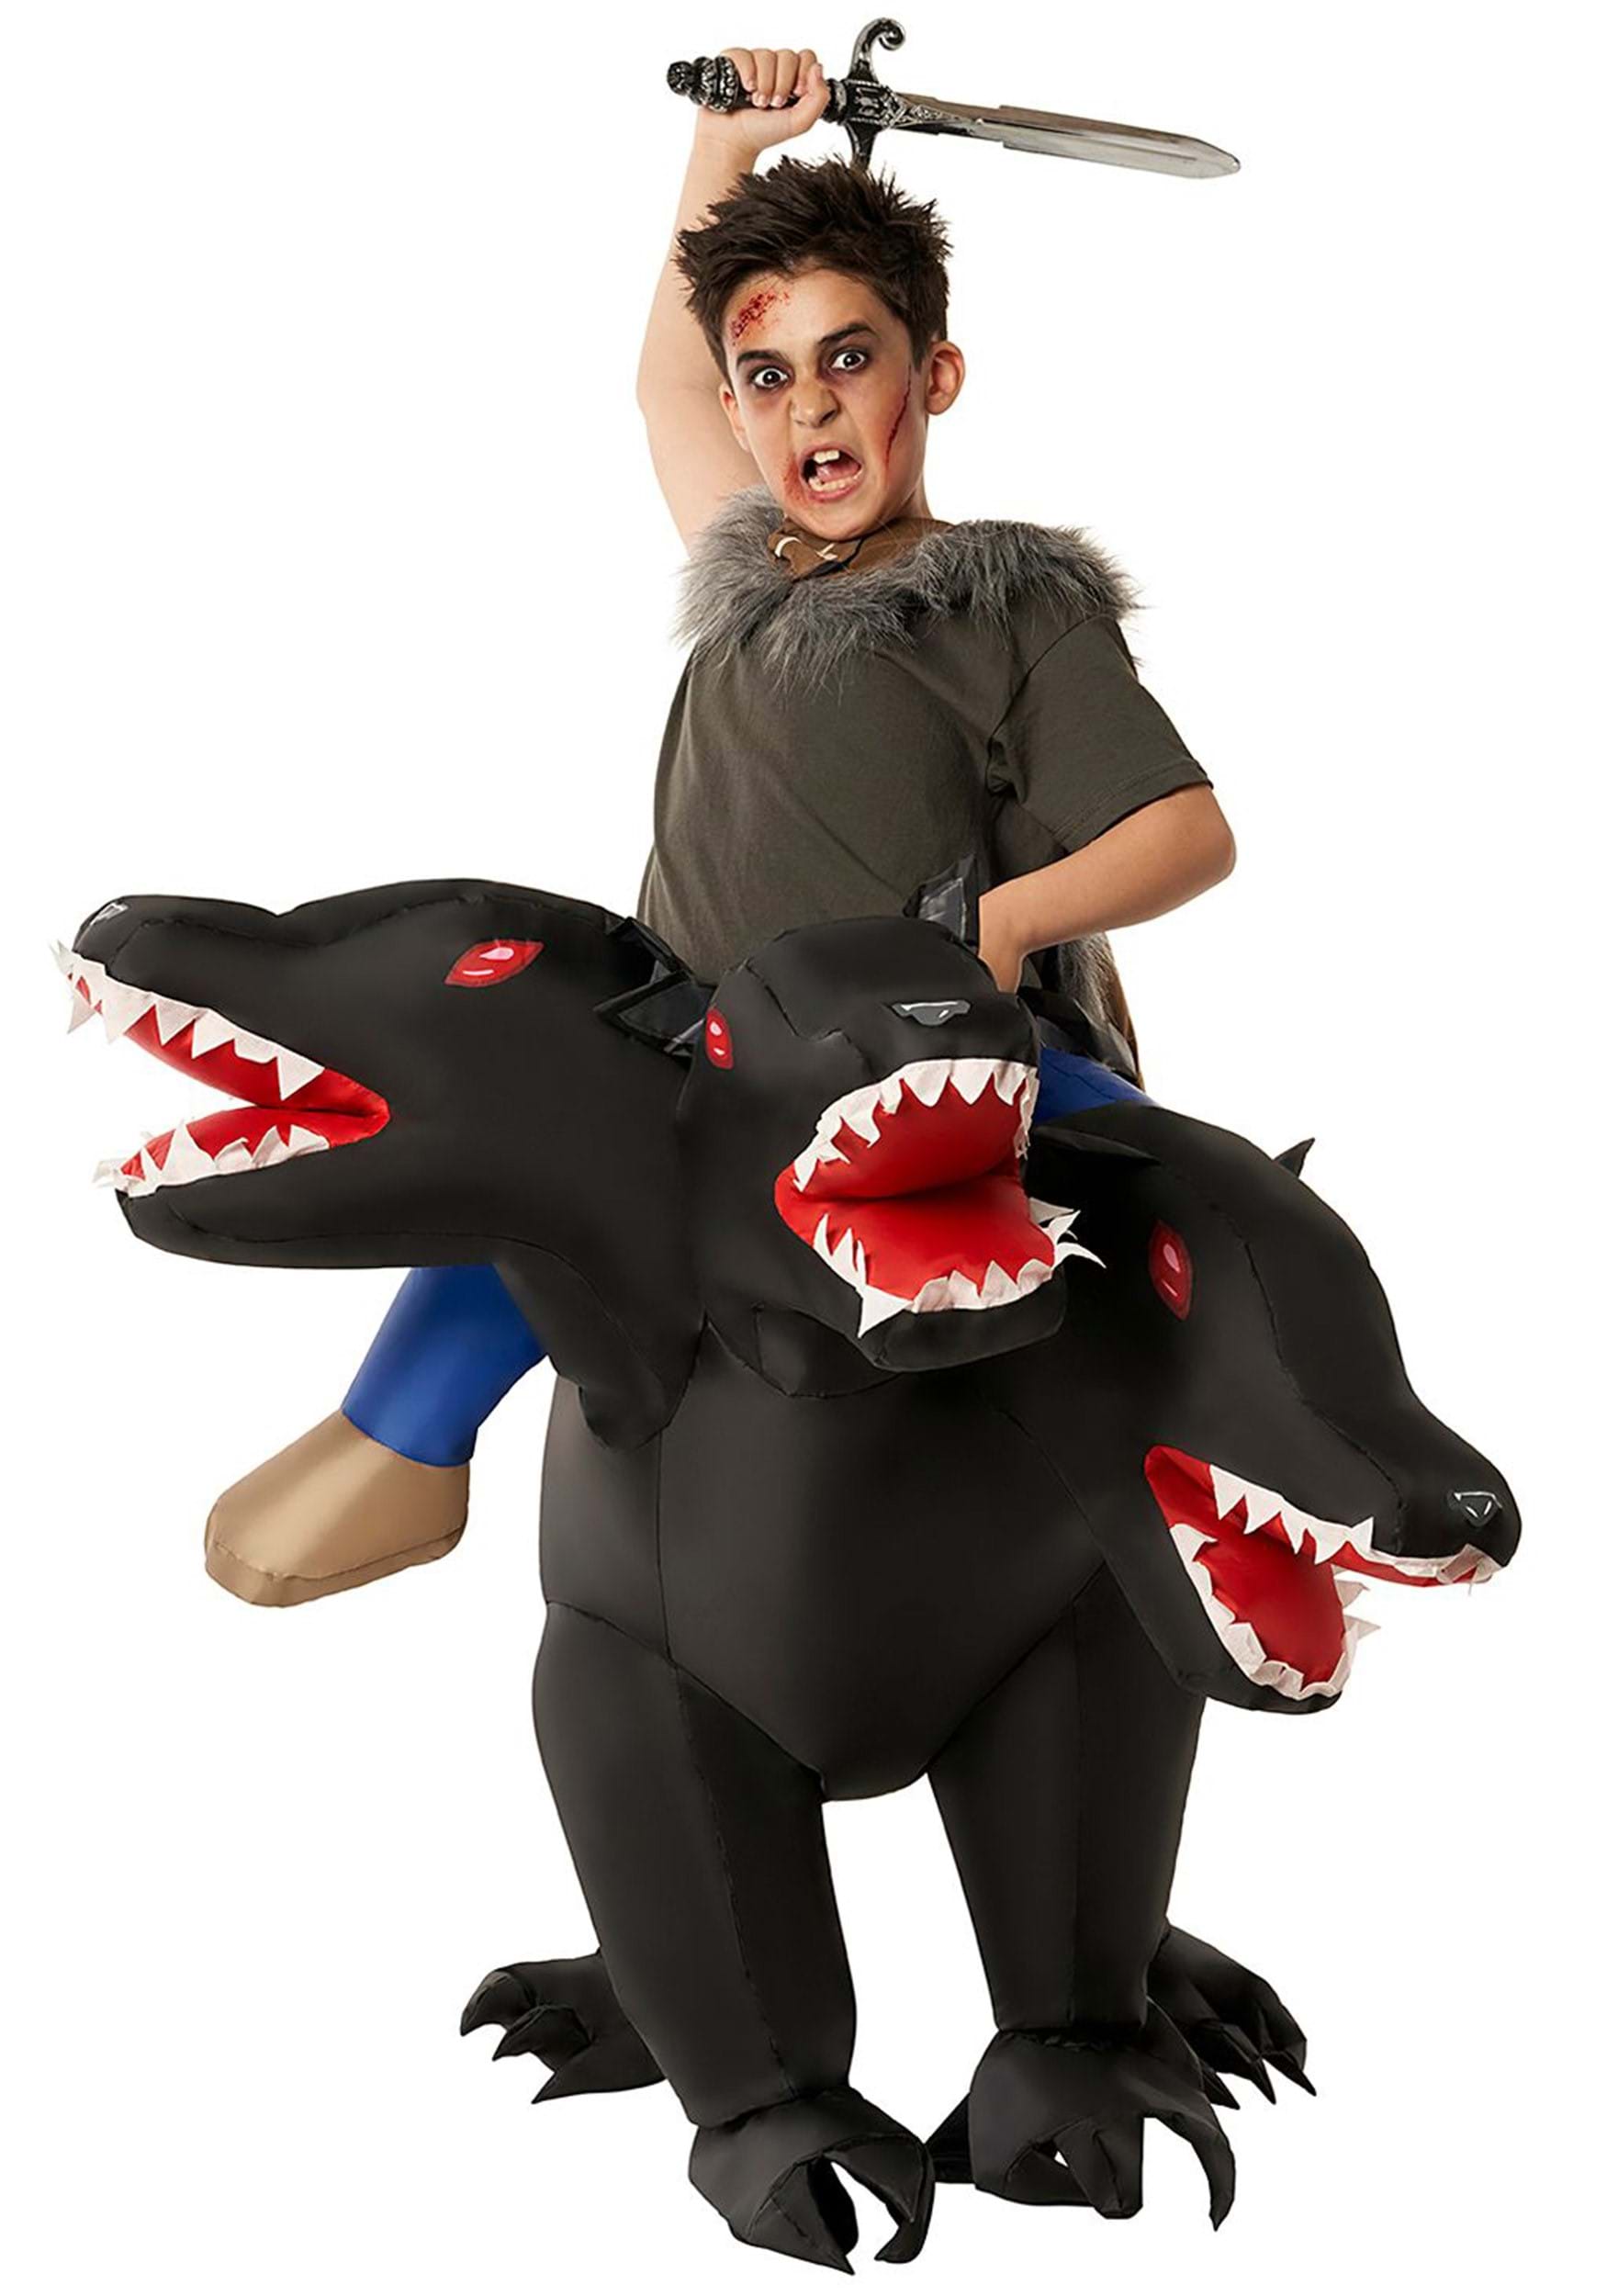 Kids Evil 3-Headed Dog Ride On Inflatable Costume